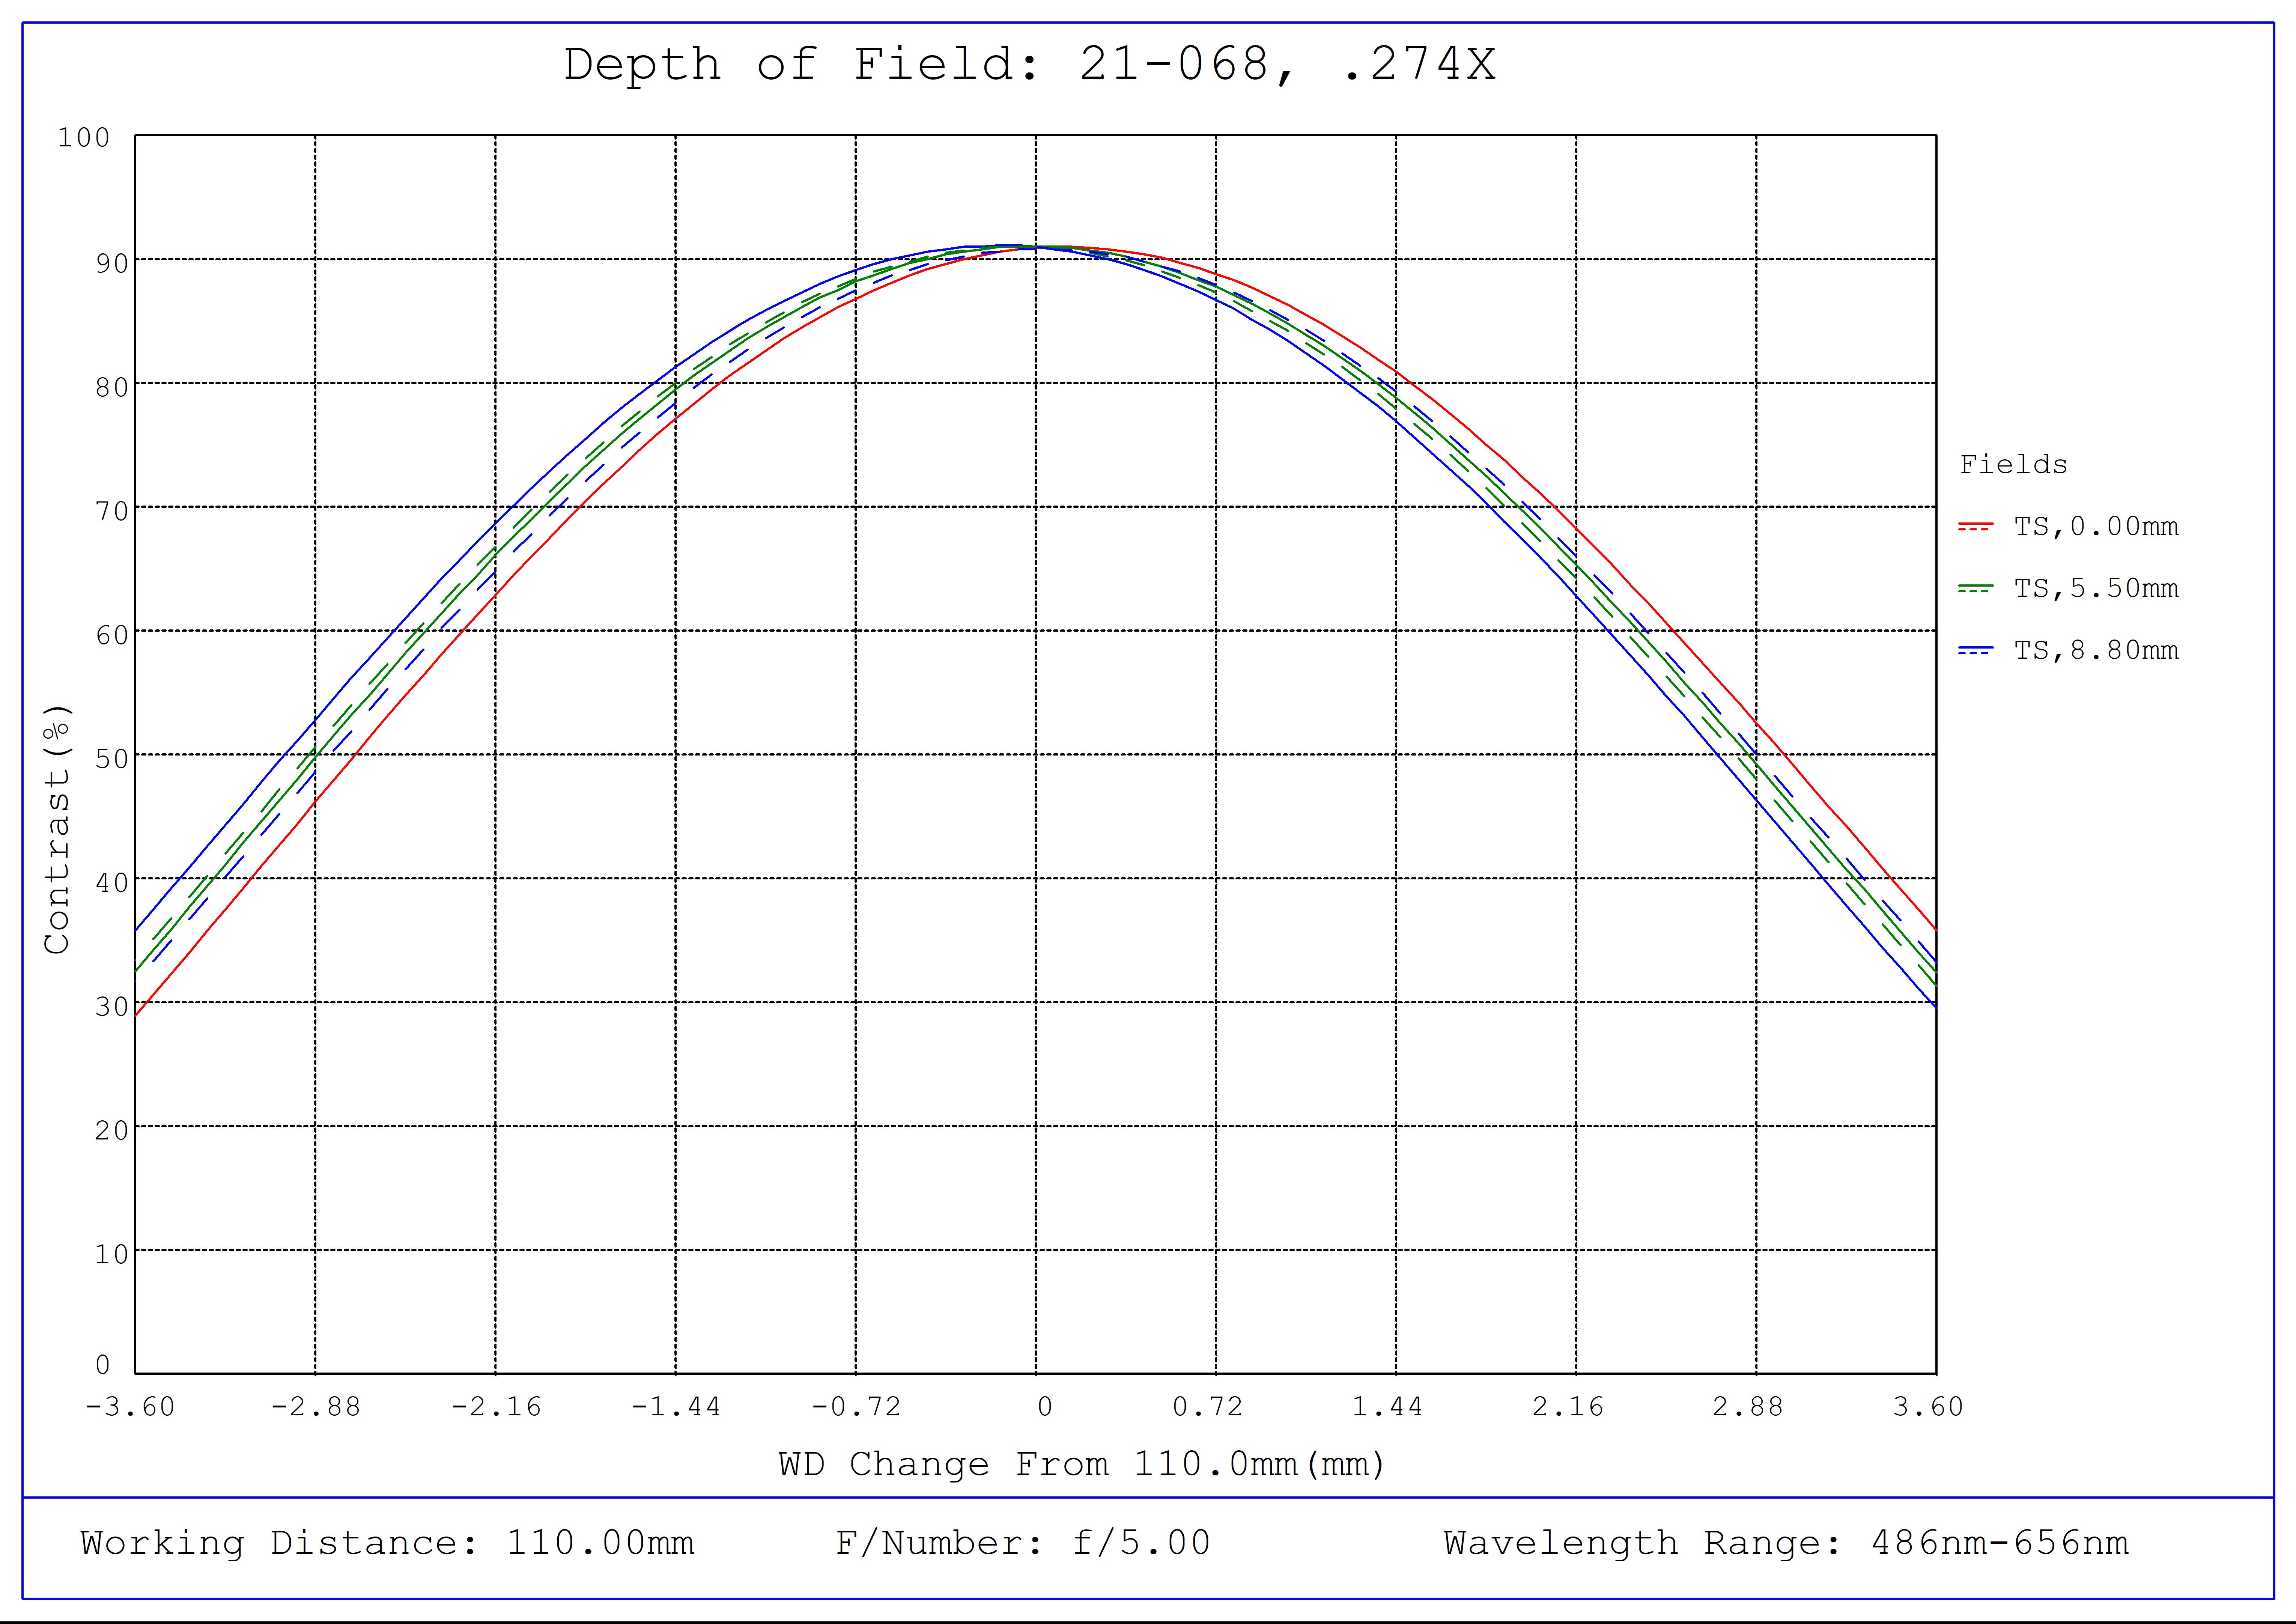 #21-068, 0.274X CobaltTL Telecentric Lens, Depth of Field Plot, 110mm Working Distance, f5